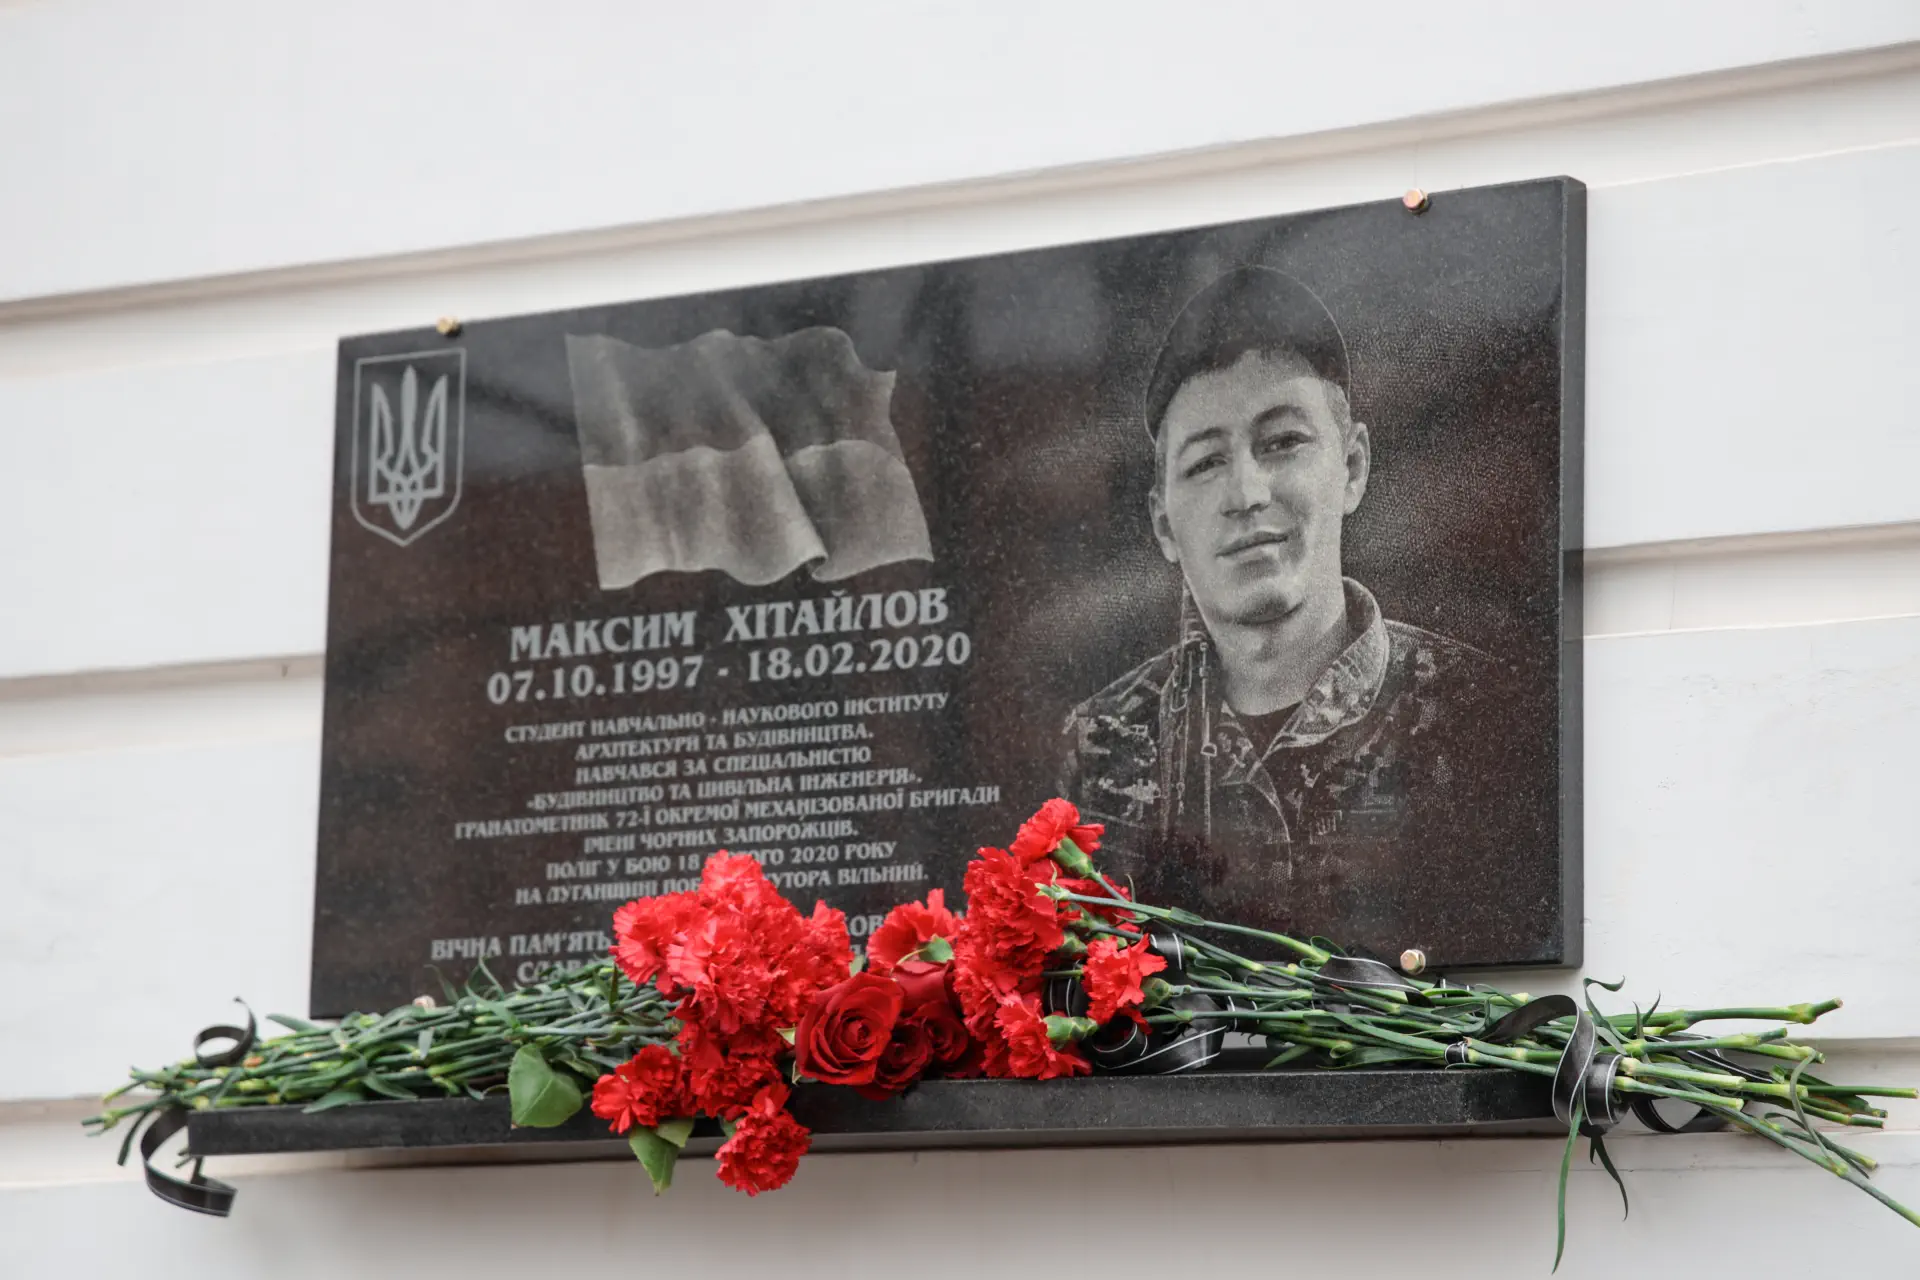 University honors the memory of the deceased student Maksym Khitailov